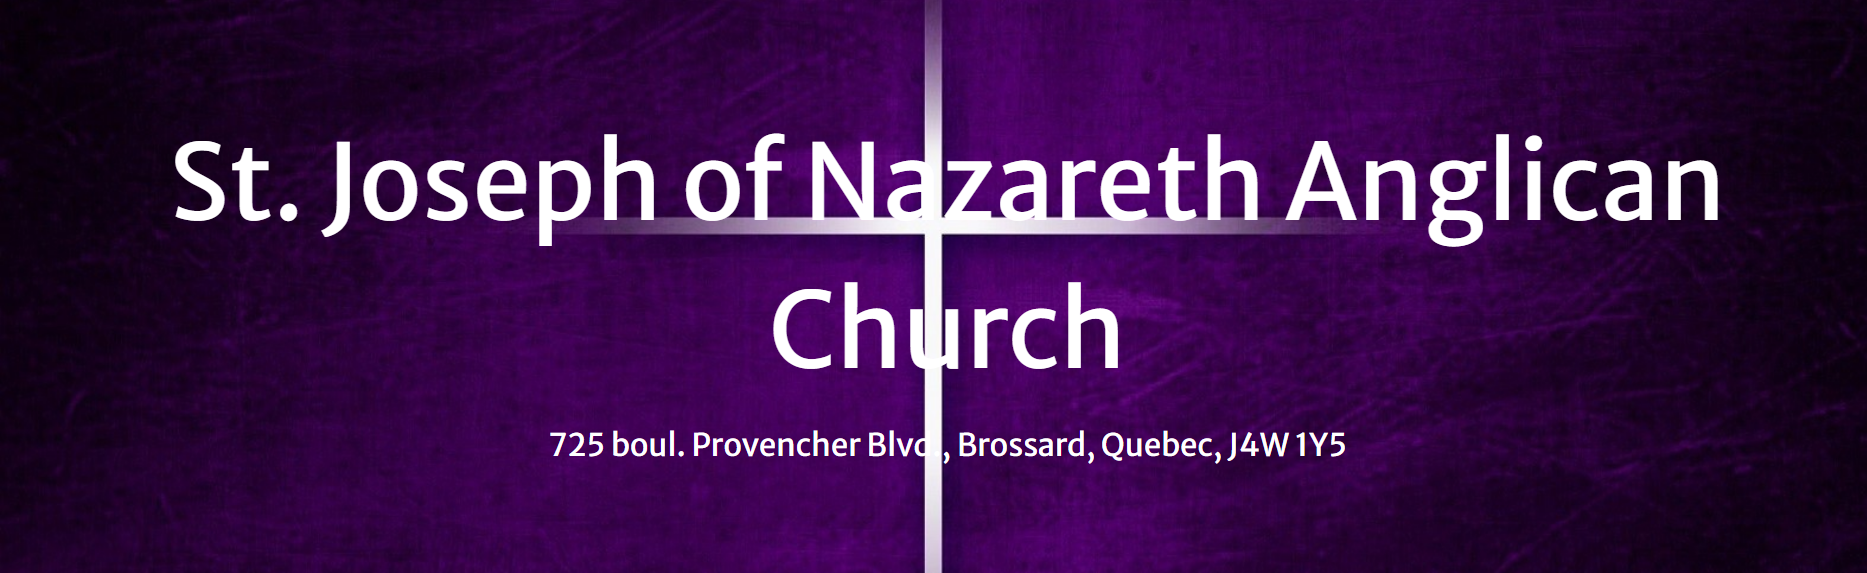 St. Joseph of Nazareth Anglican Church logo